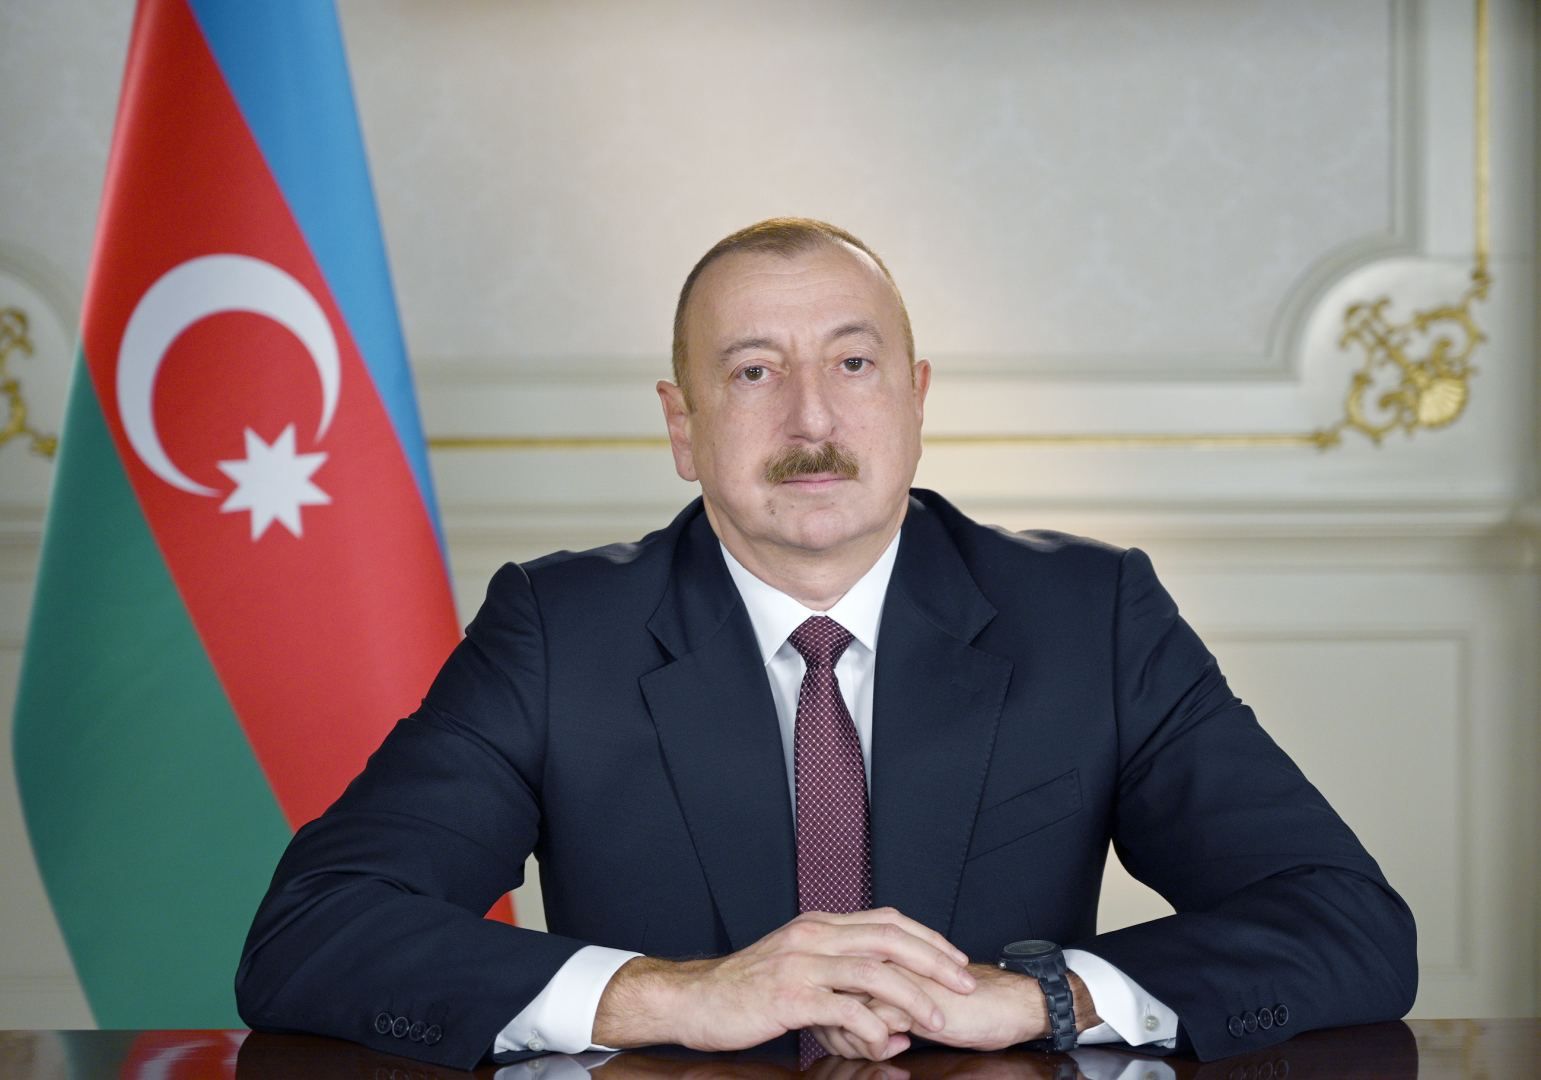 Singaporean president congrats Azerbaijani leader on upcoming national holiday [UPDATE]